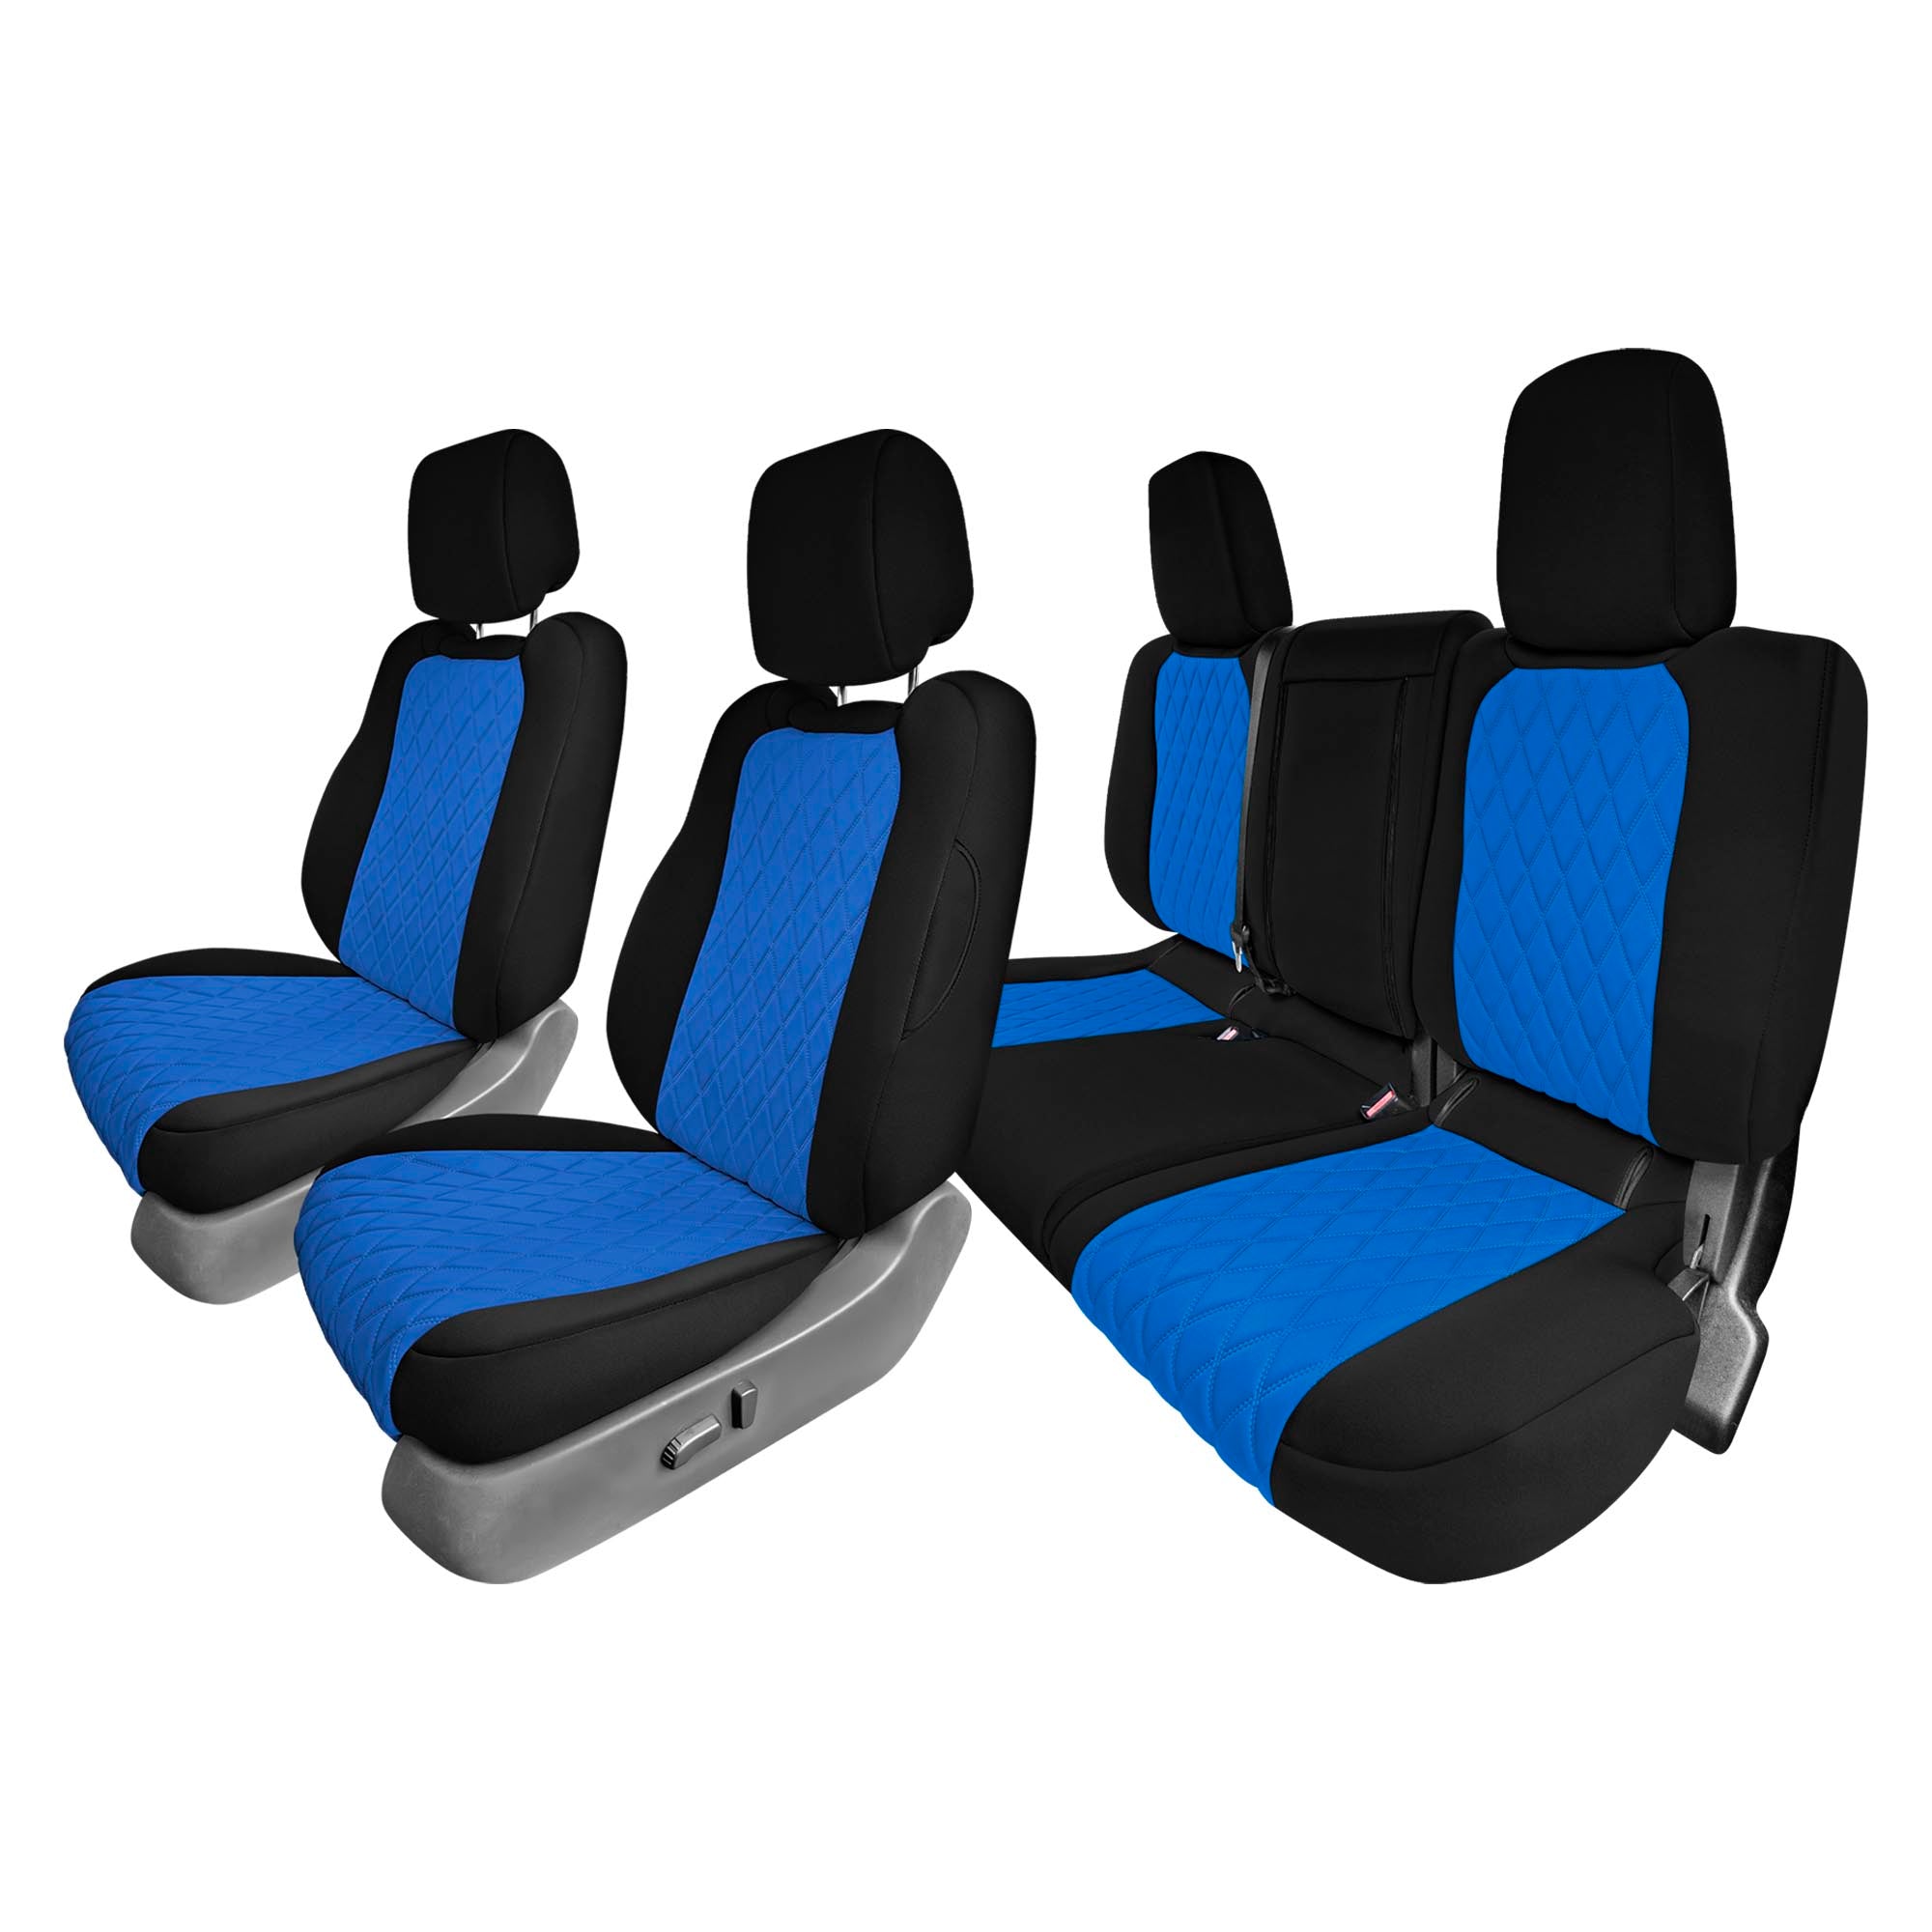 Nissan Titan King Cab/Crew Cab - 2017-2022 - Full Set Seat Covers - Blue Ultraflex Neoprene